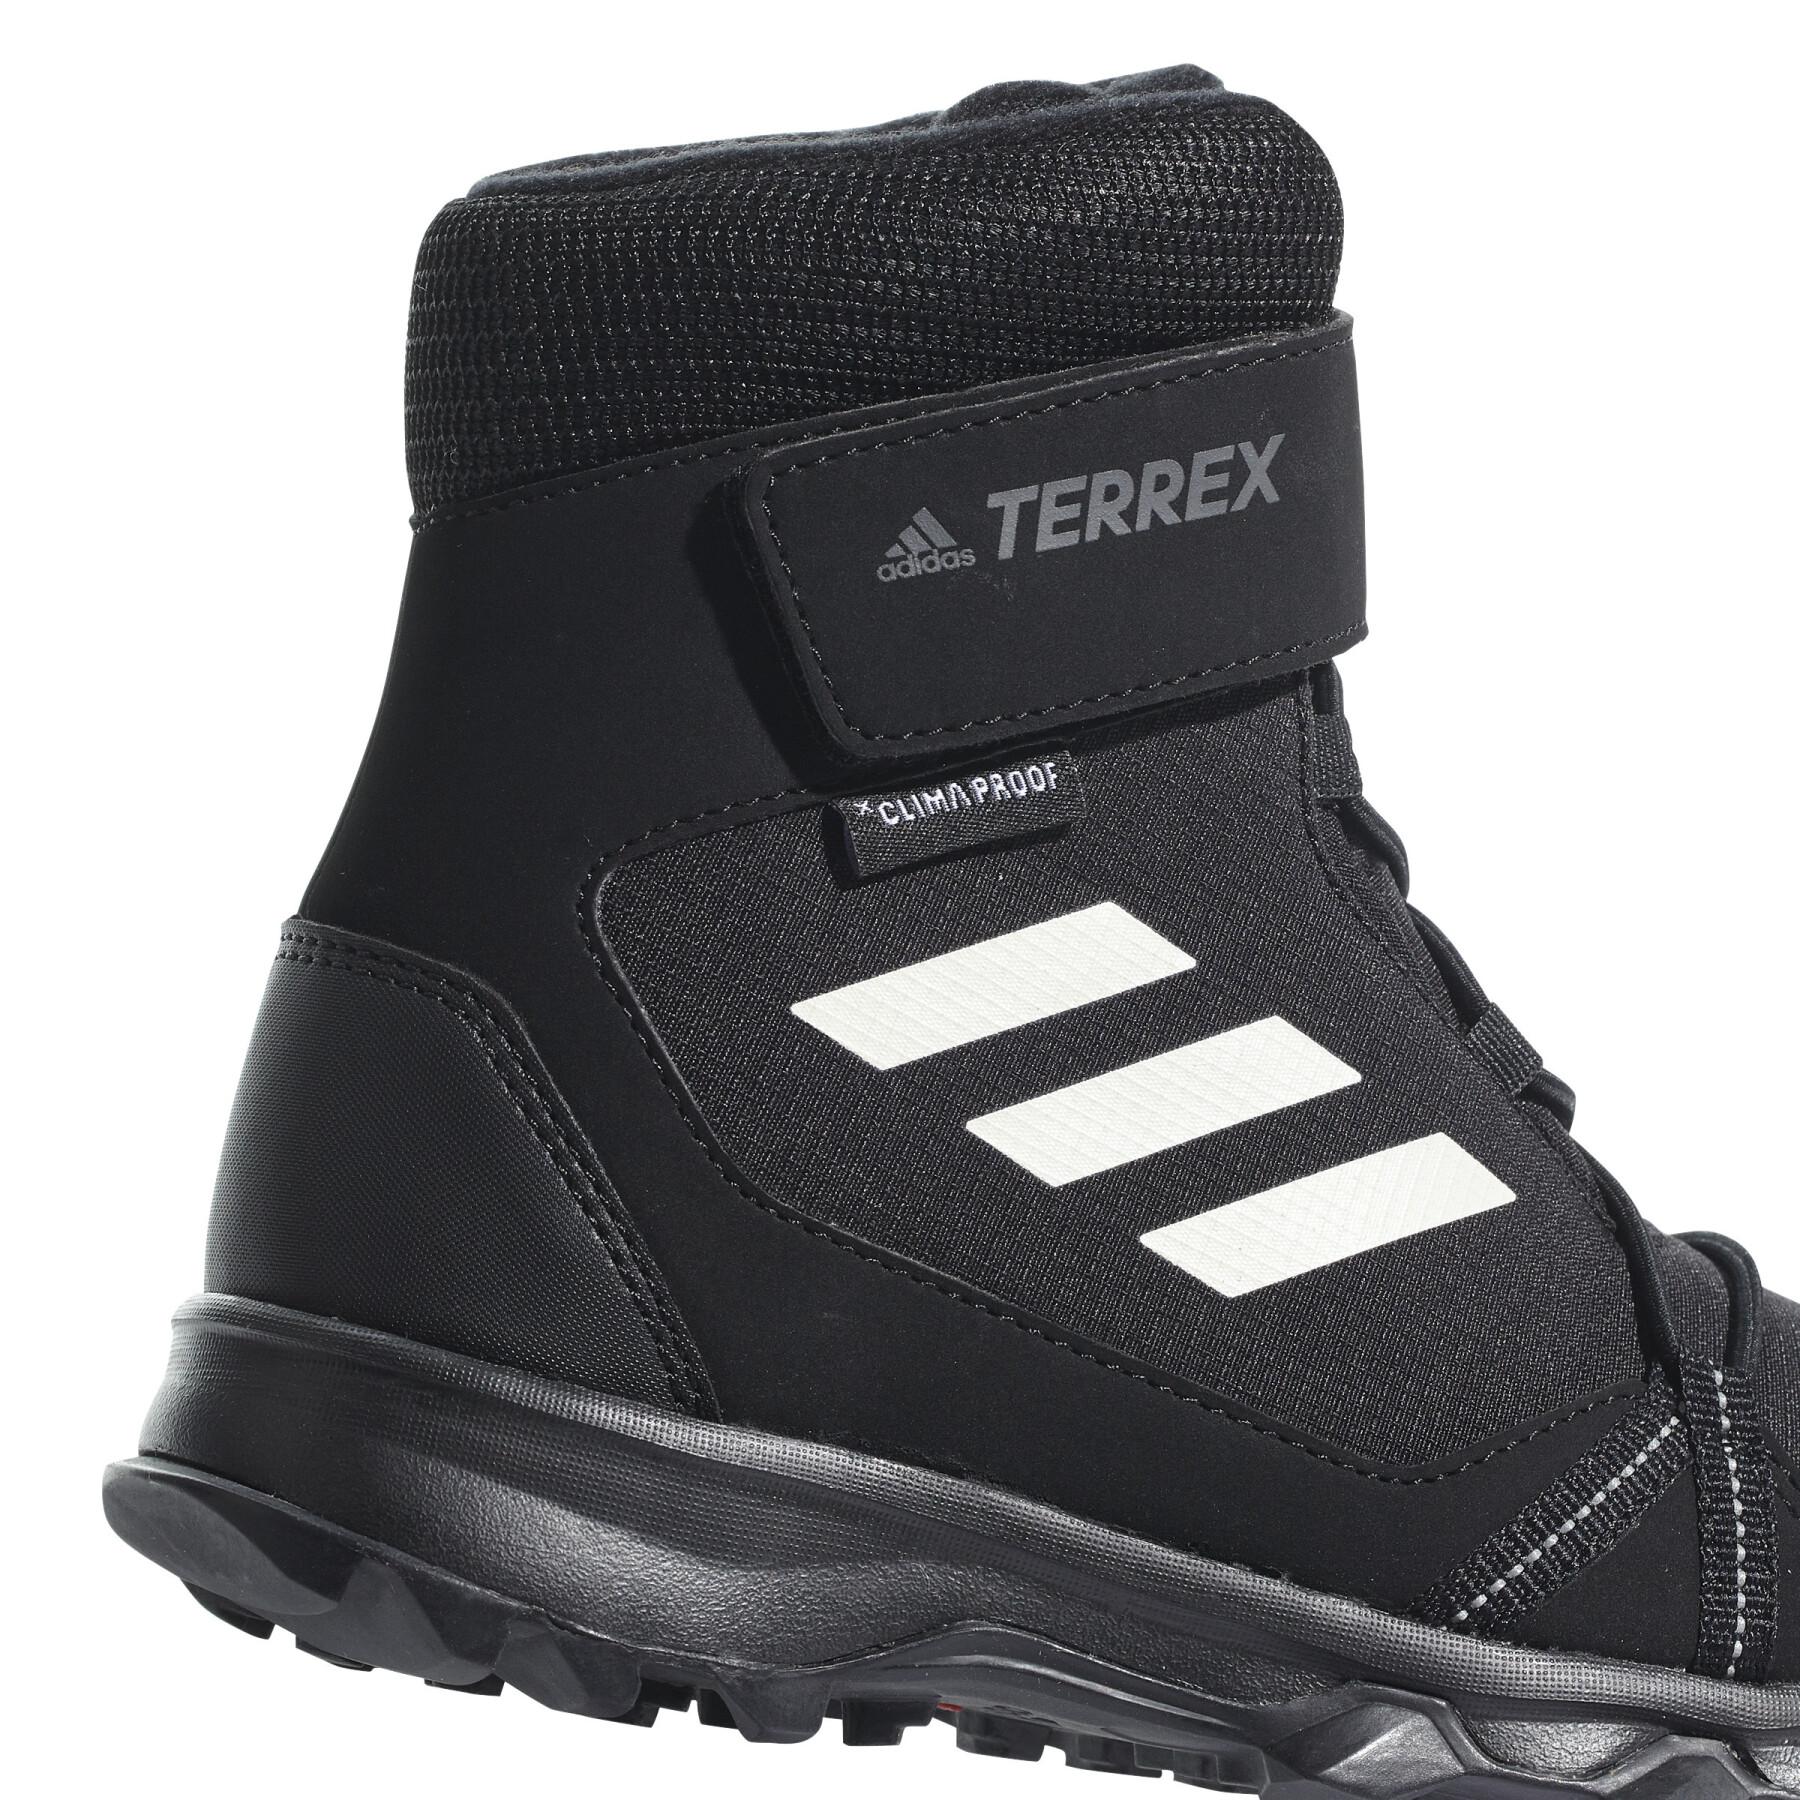 Kid hiking shoes adidas Terrex Snow CF CP CW